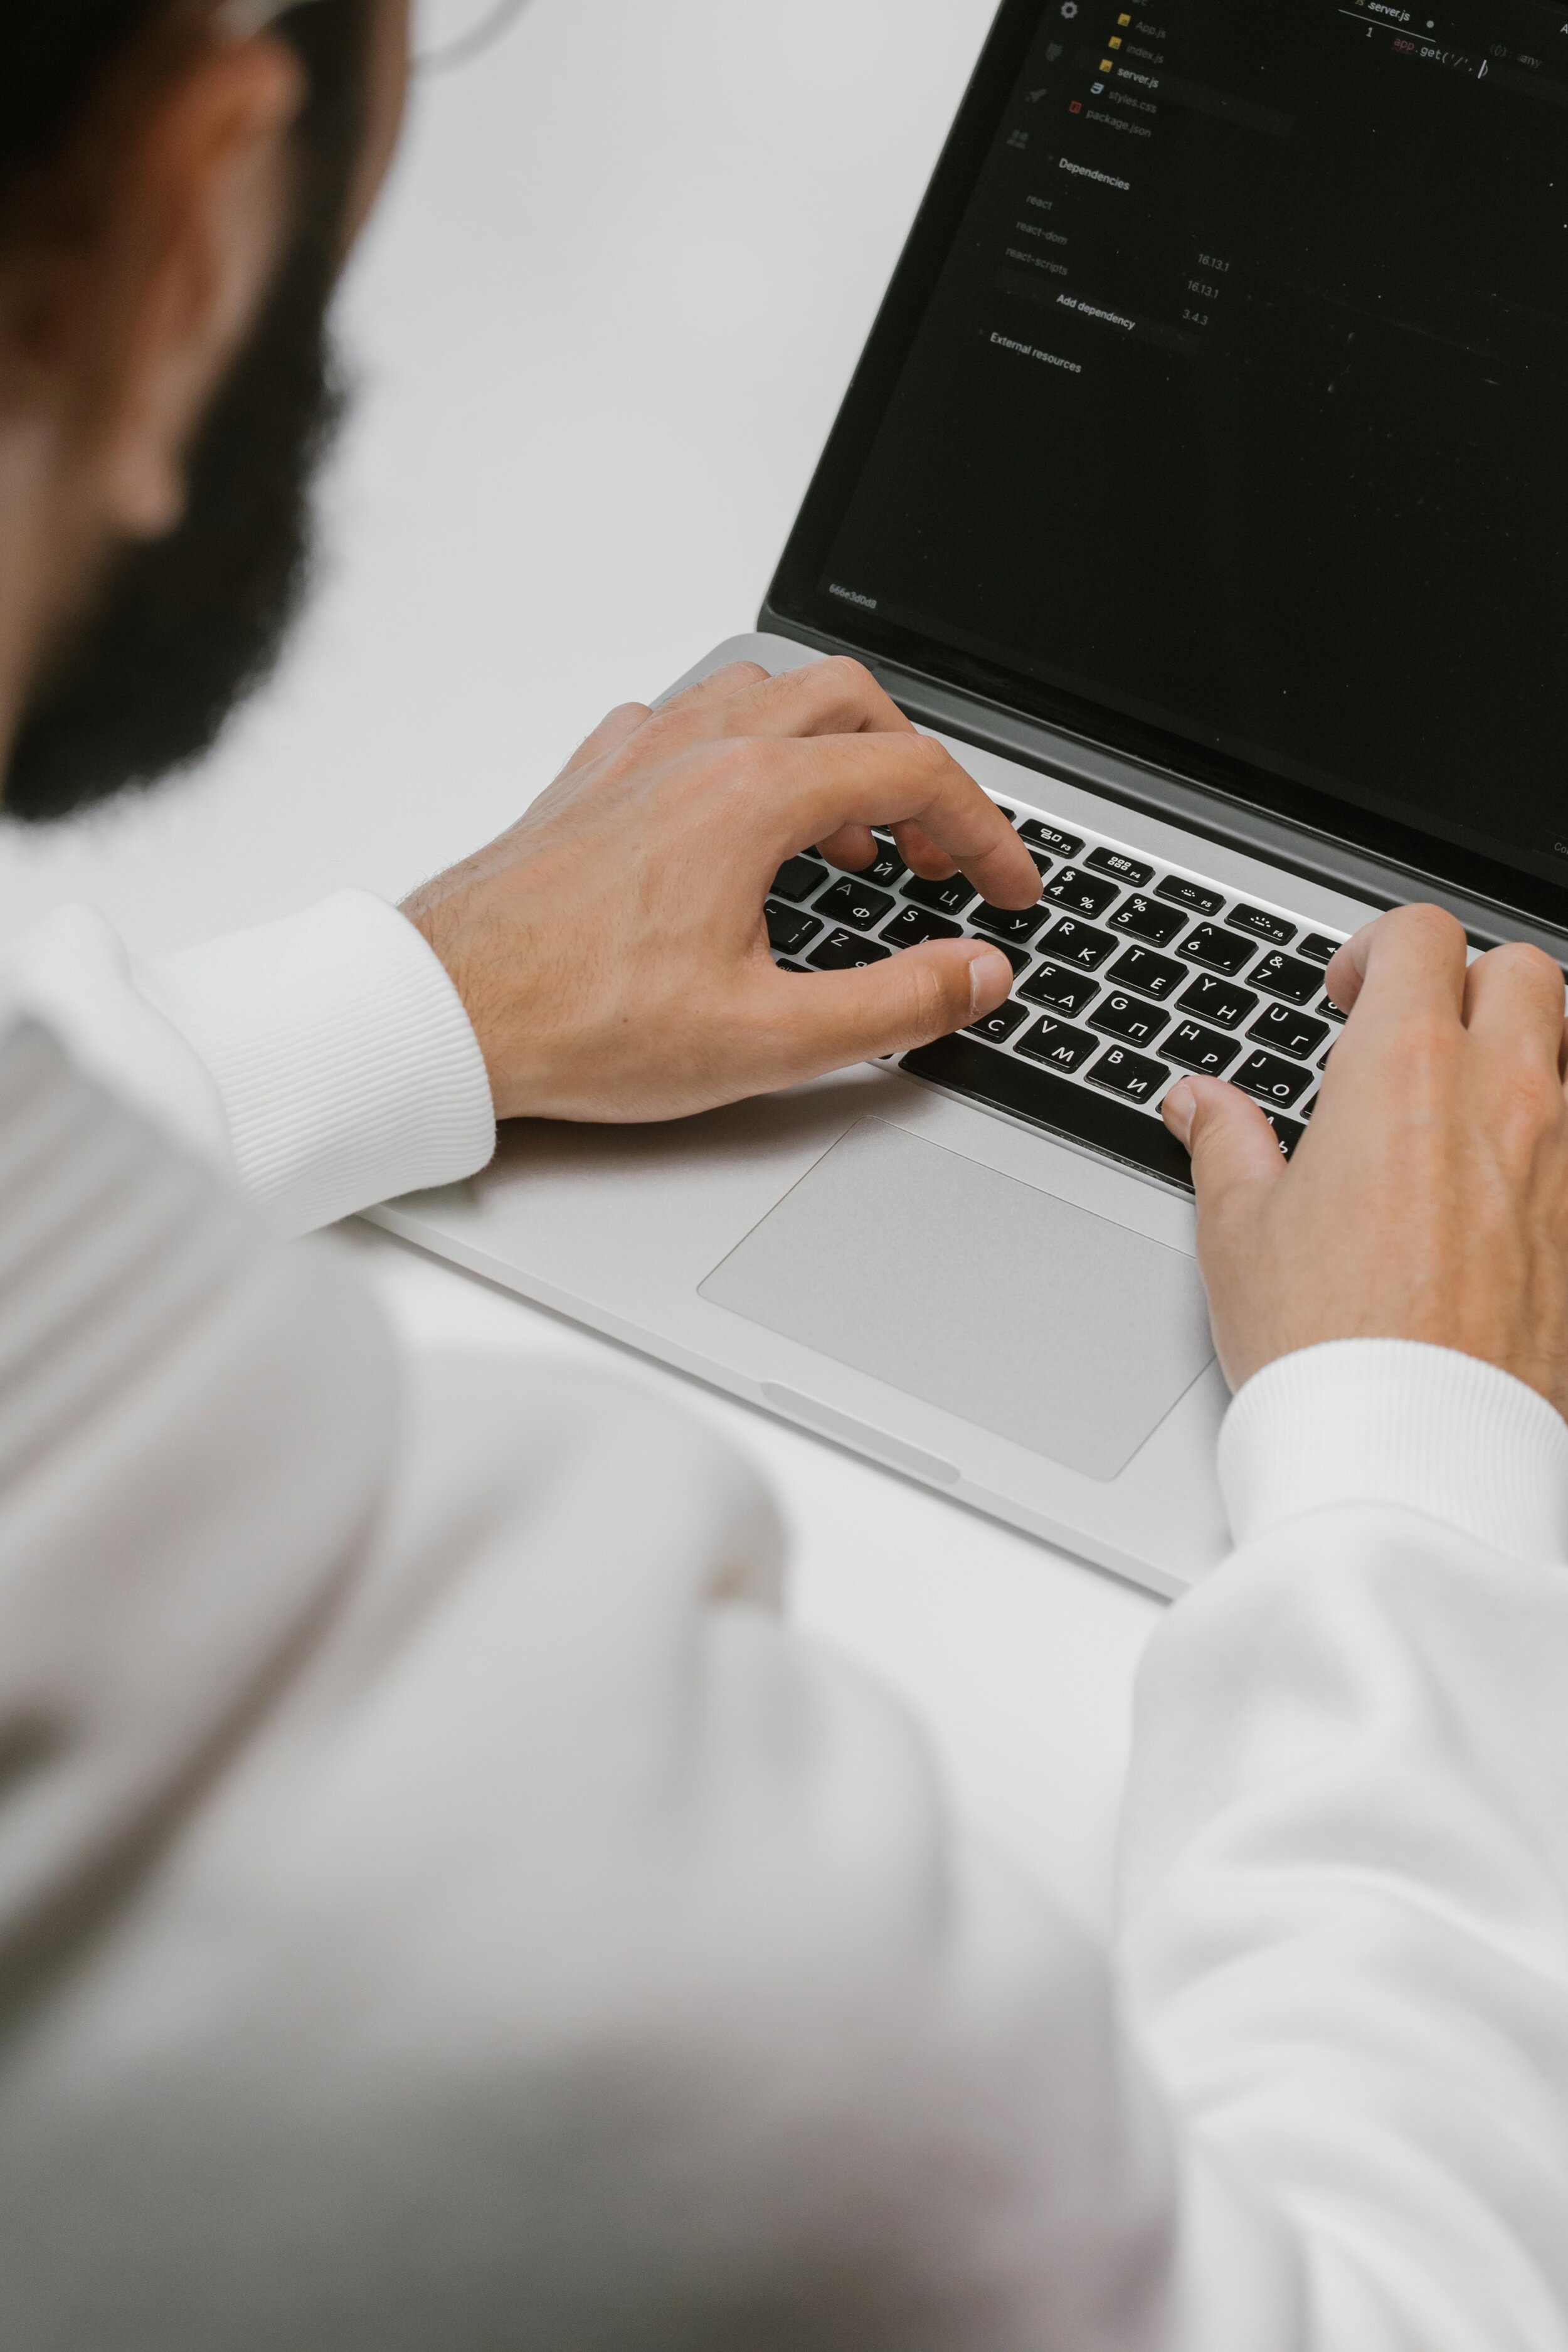 Man wearing white dress shirt using a laptop to make cybersecurity updates